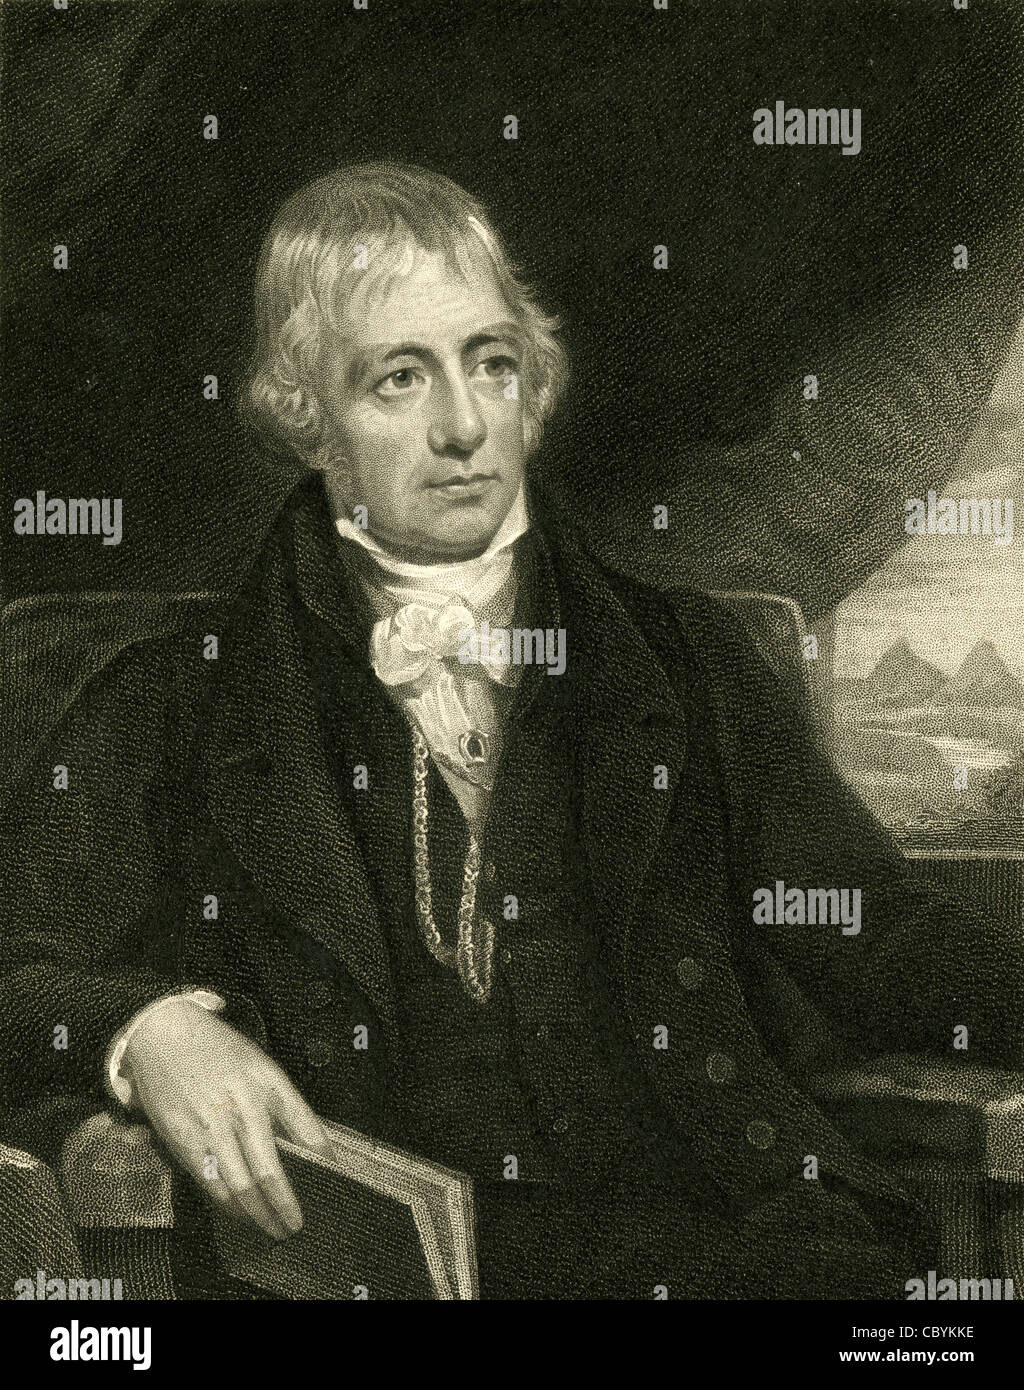 1830 engraving of Sir Walter Scott. Stock Photo